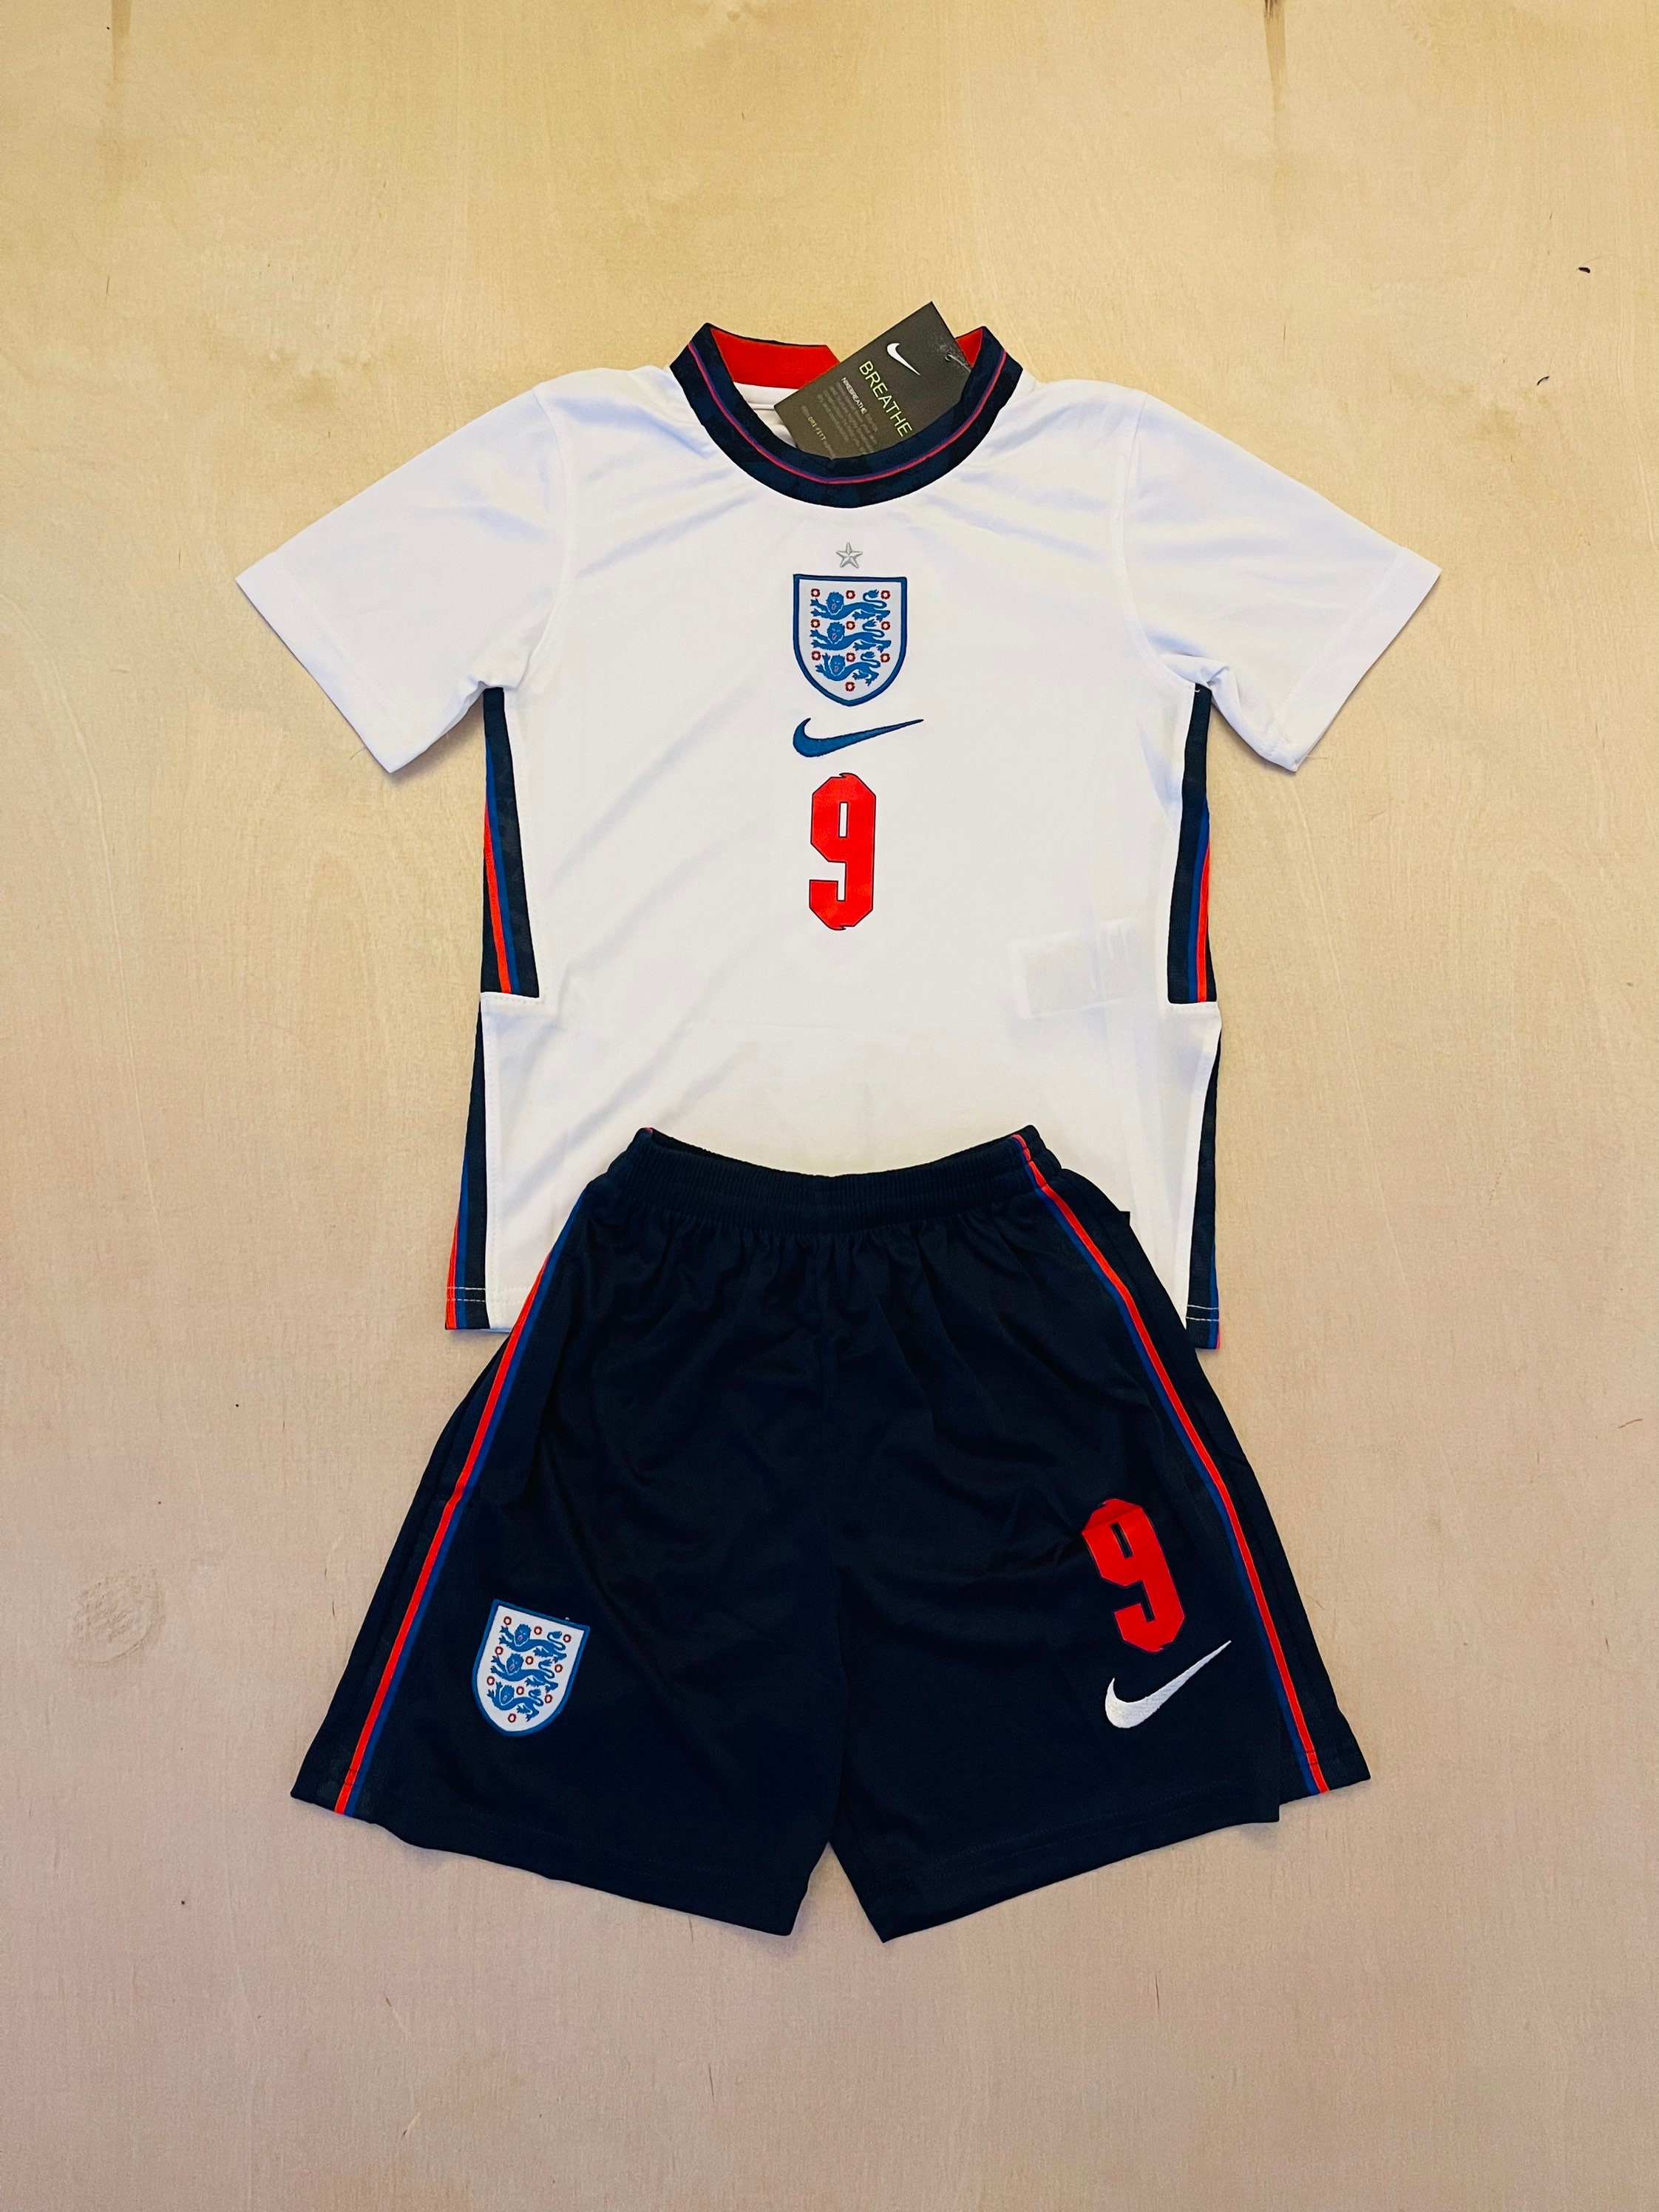 Harry Kane 9 England youth soccer jersey set for kids | Etsy